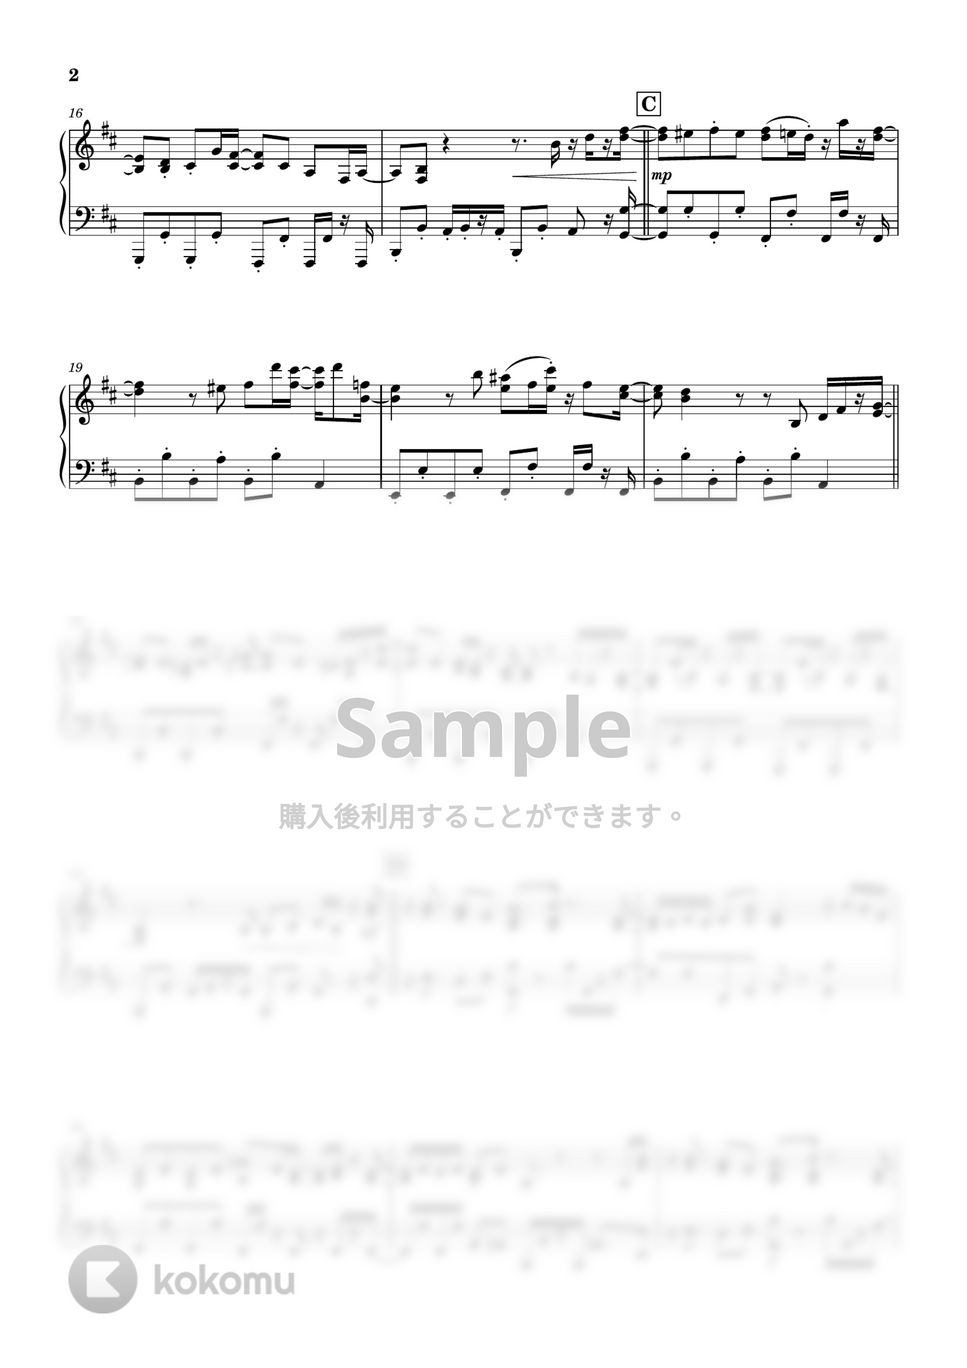 MAISONdes　feat. ツミキ, 花譜 - トウキョウ・シャンディ・ランデヴ by Niisan